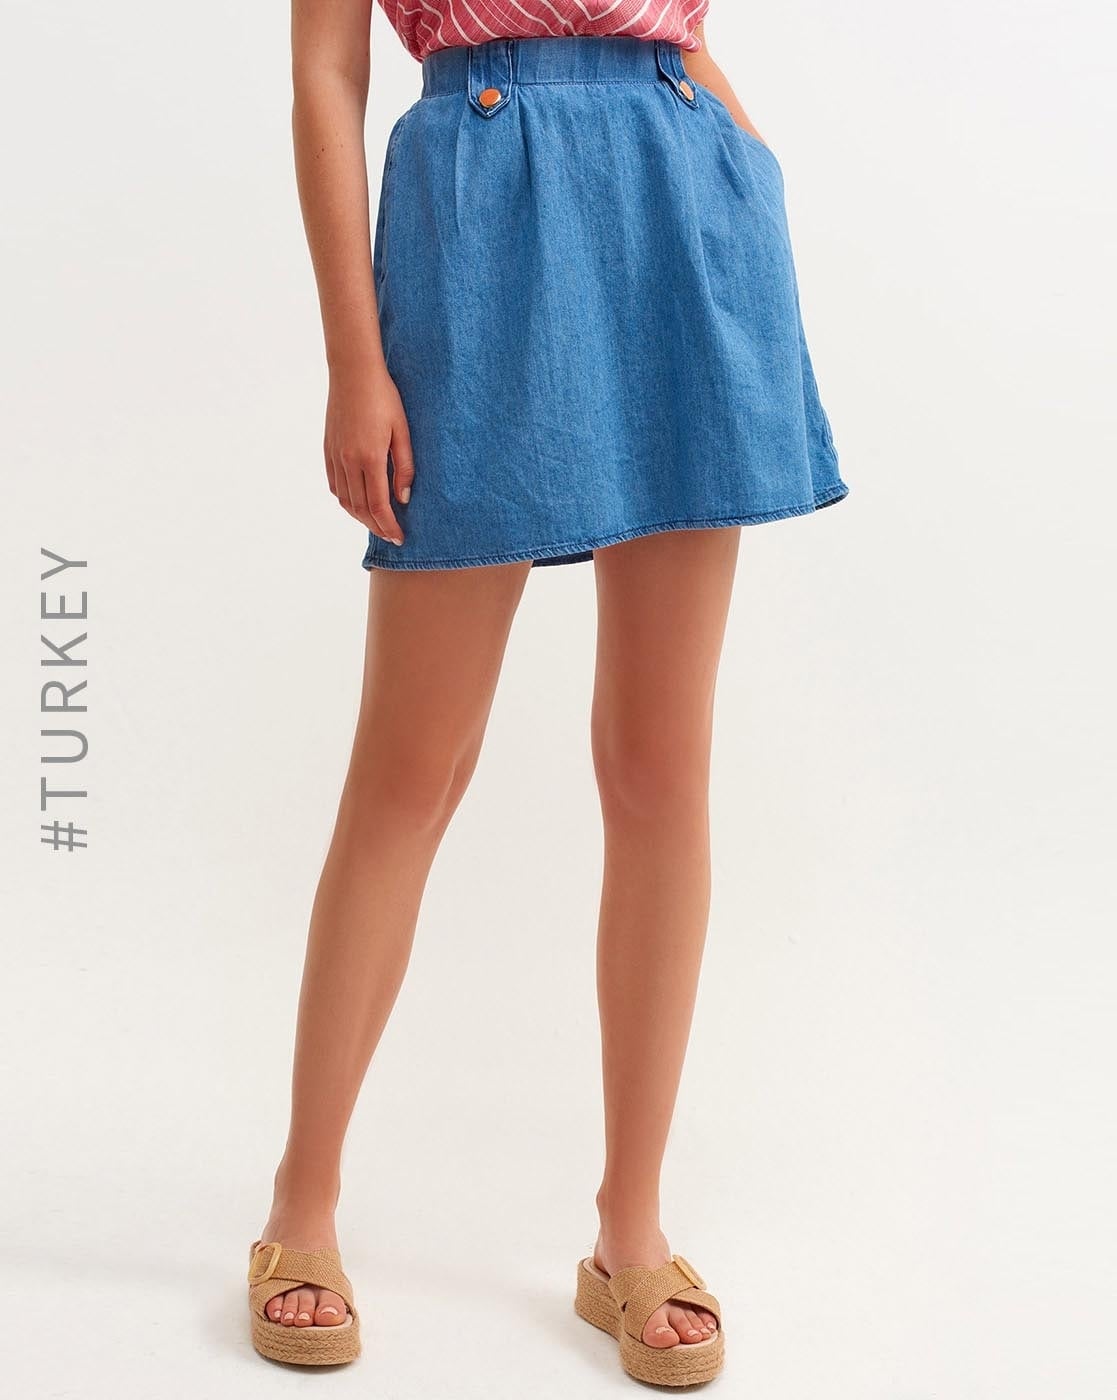 Women's American Apparel Blue Mid-Wash Denim High-Waist Circle Skater Skirt  S/8 | eBay